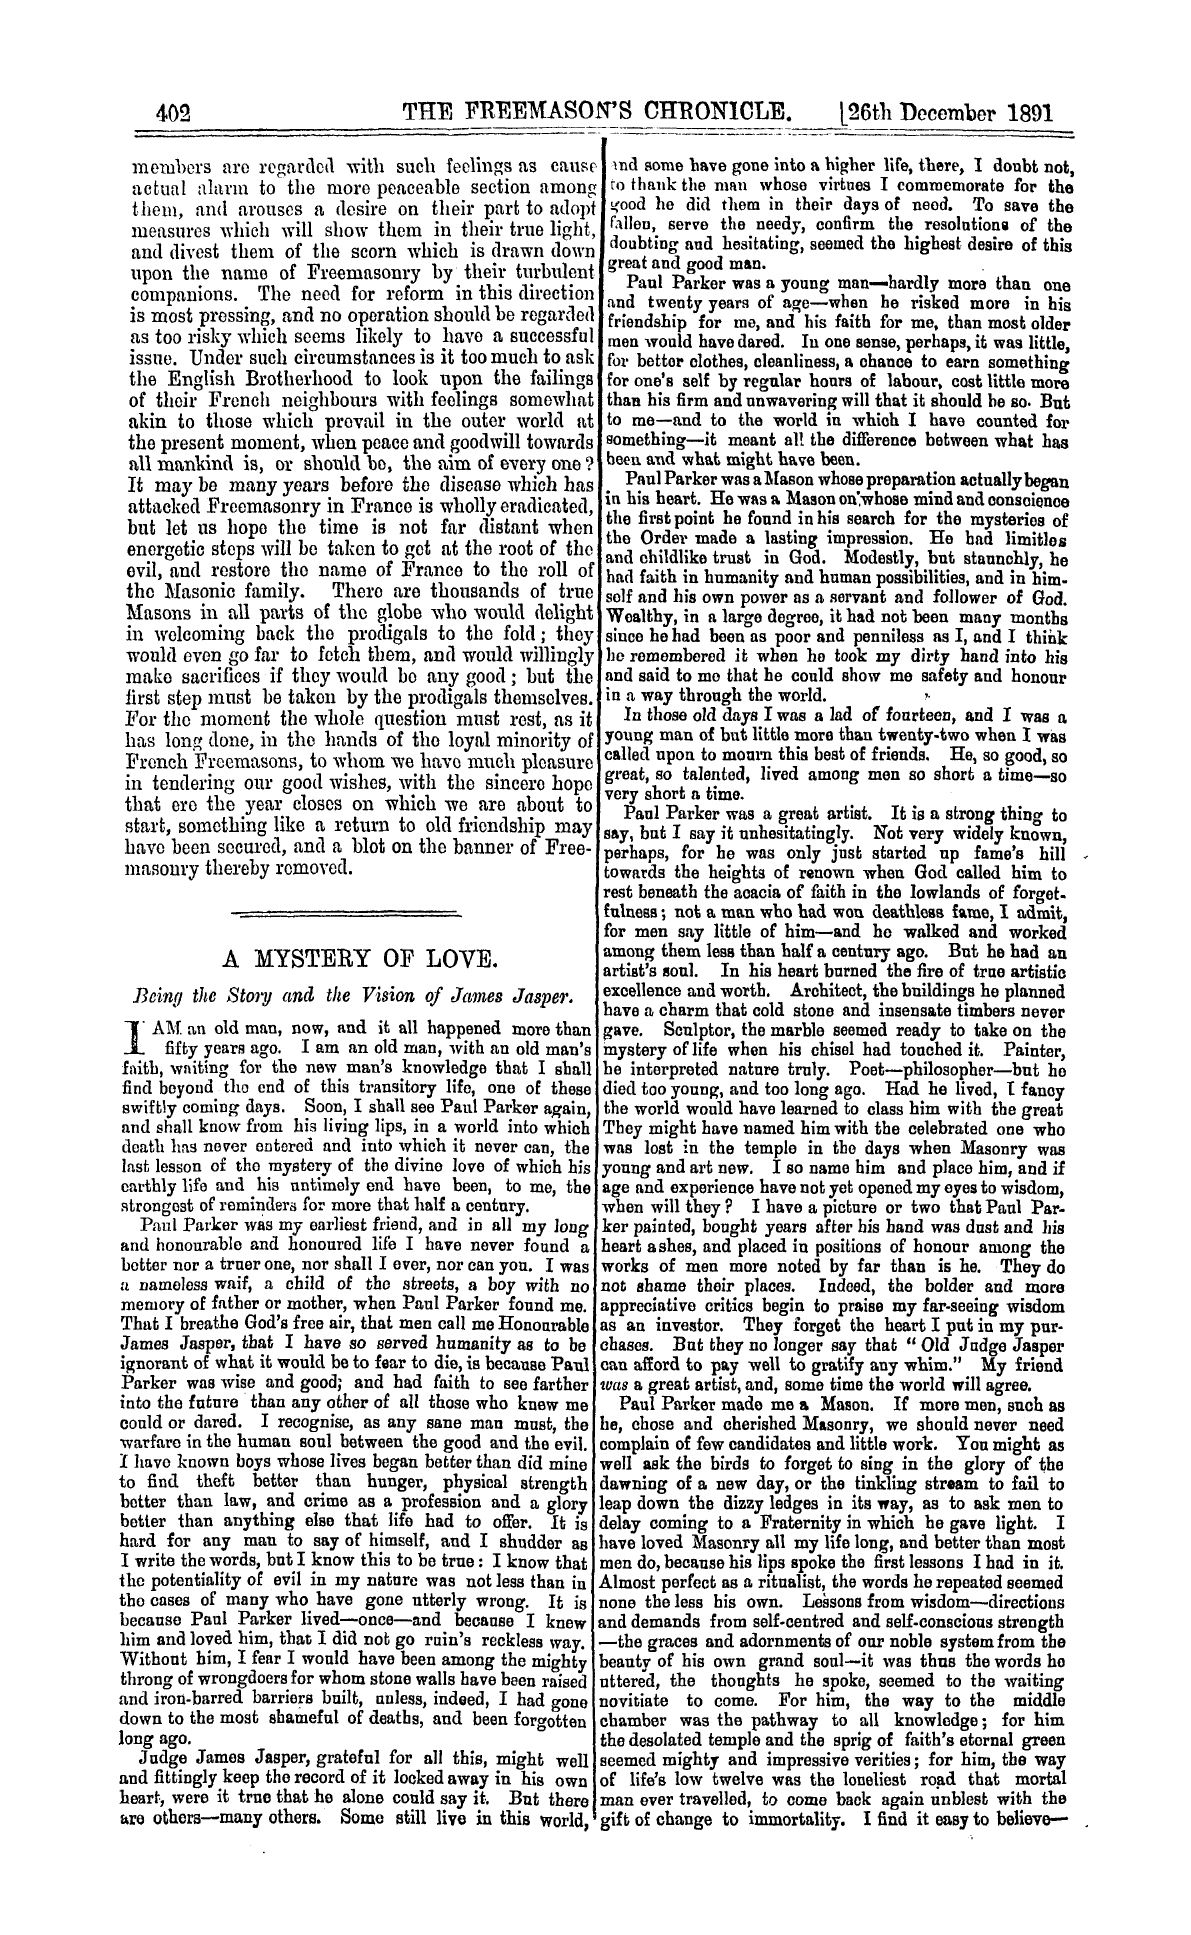 The Freemason's Chronicle: 1891-12-26 - The Prodigal's Return.